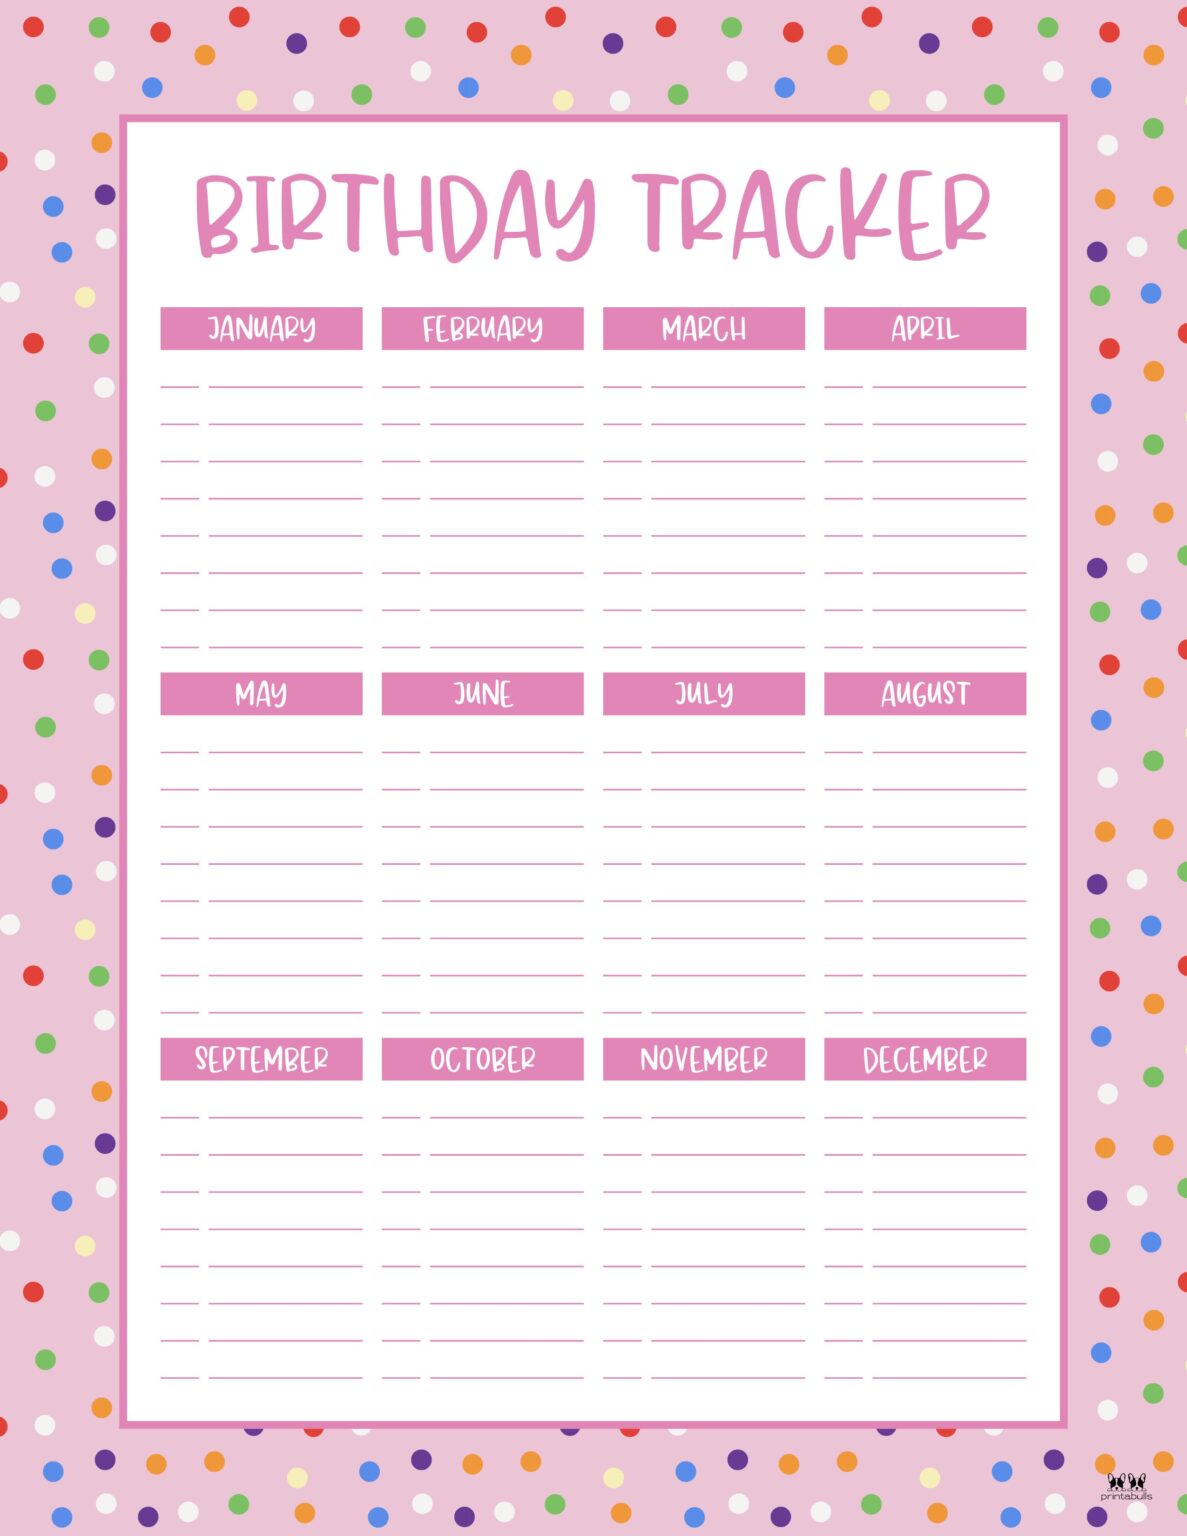 Birthday Calendars & Trackers - 20 FREE Printables | Printabulls